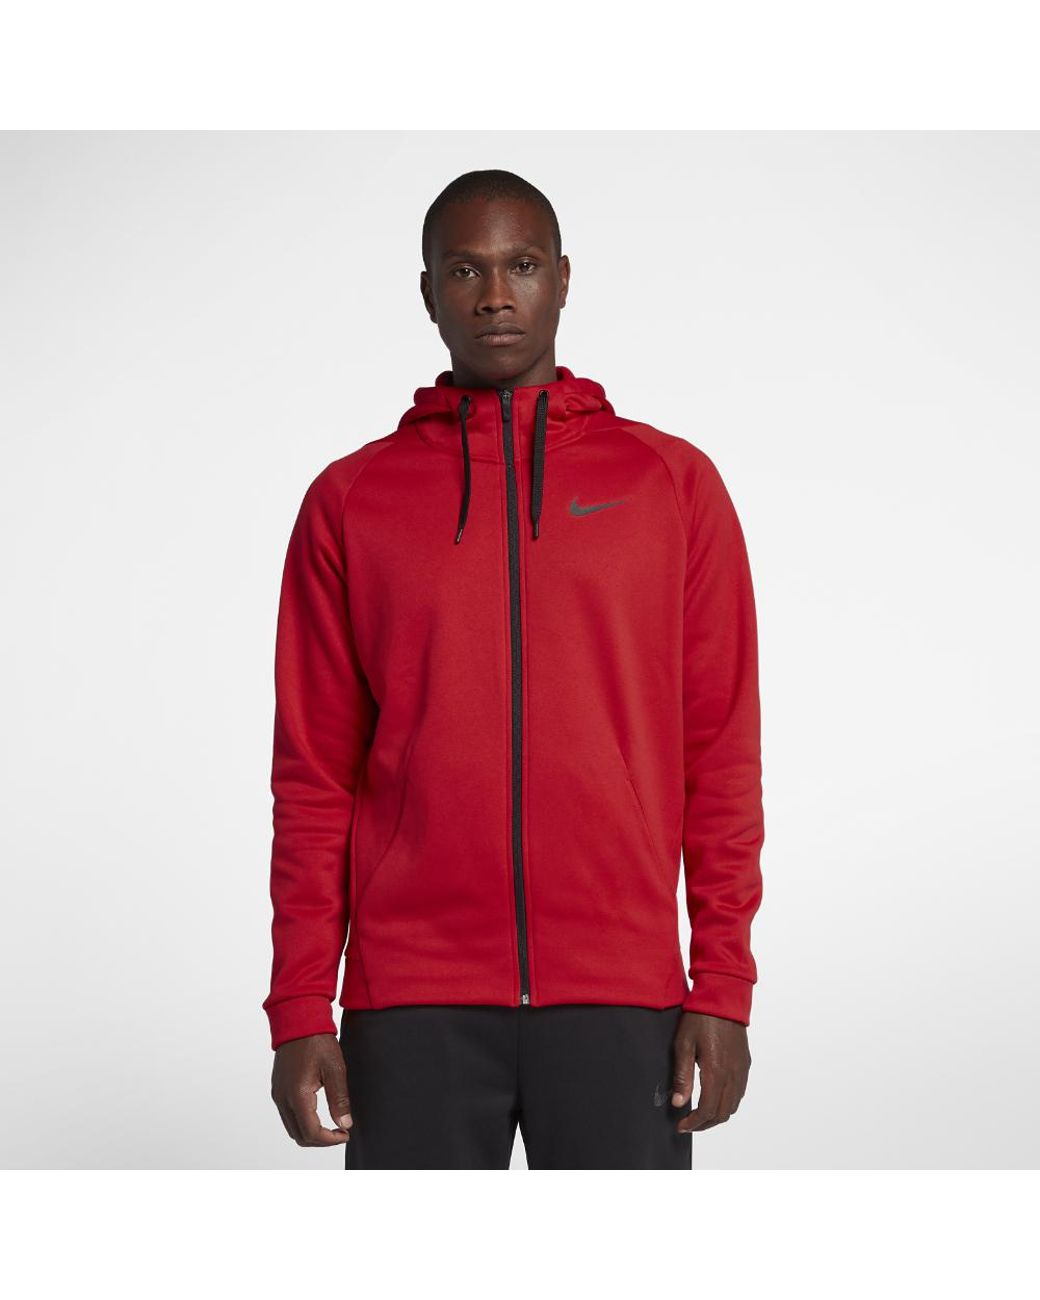 Nike Dri-fit Therma Men's Full-zip Training Hoodie in University Red/Black  (Red) for Men | Lyst